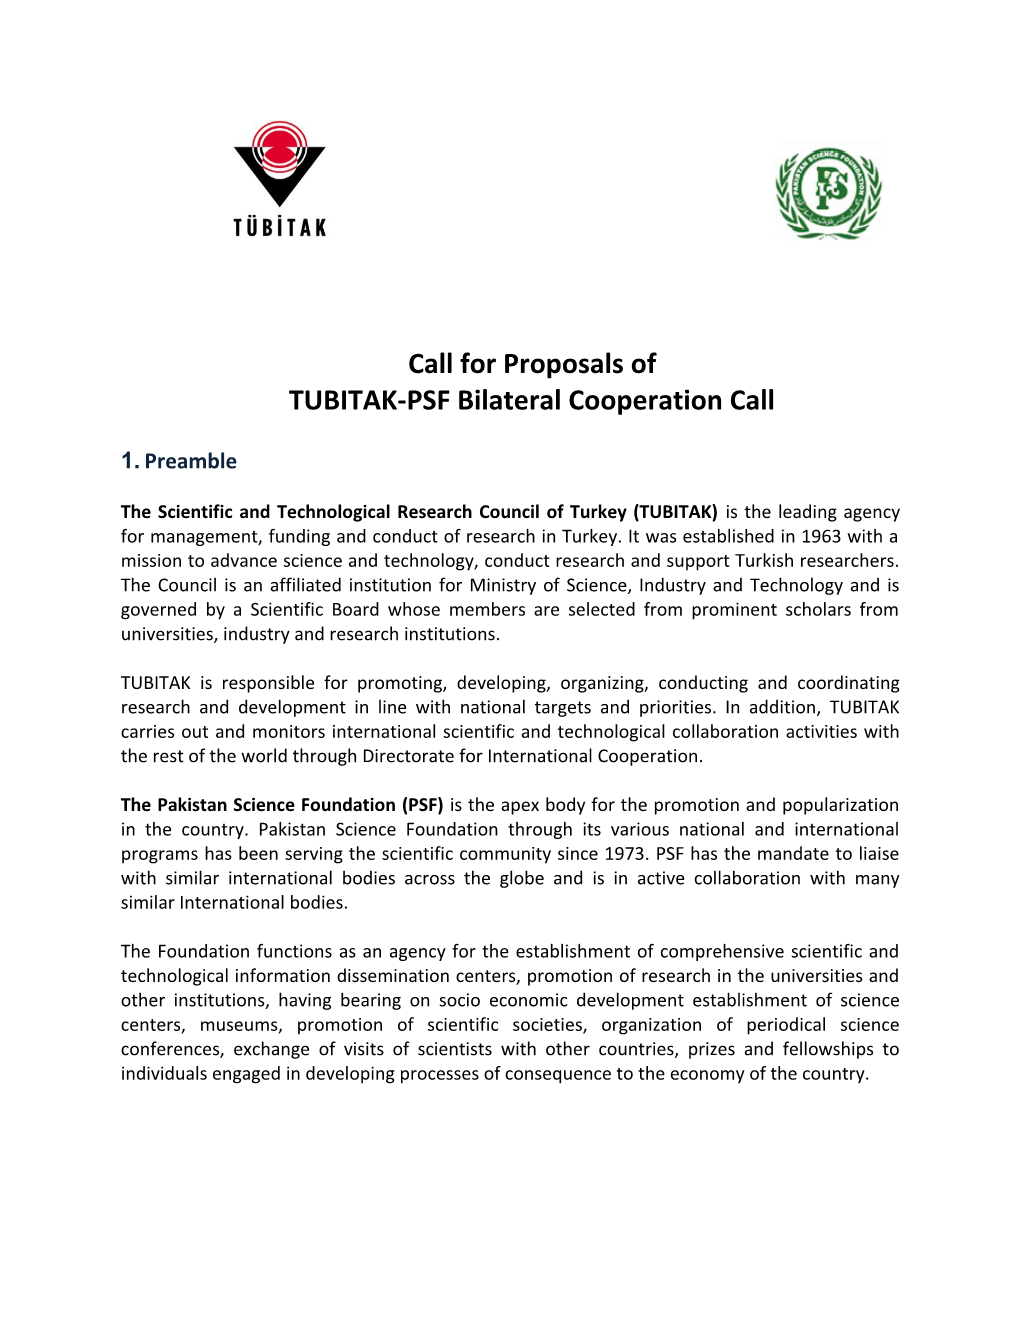 TUBITAK-PSF Bilateral Cooperation Call